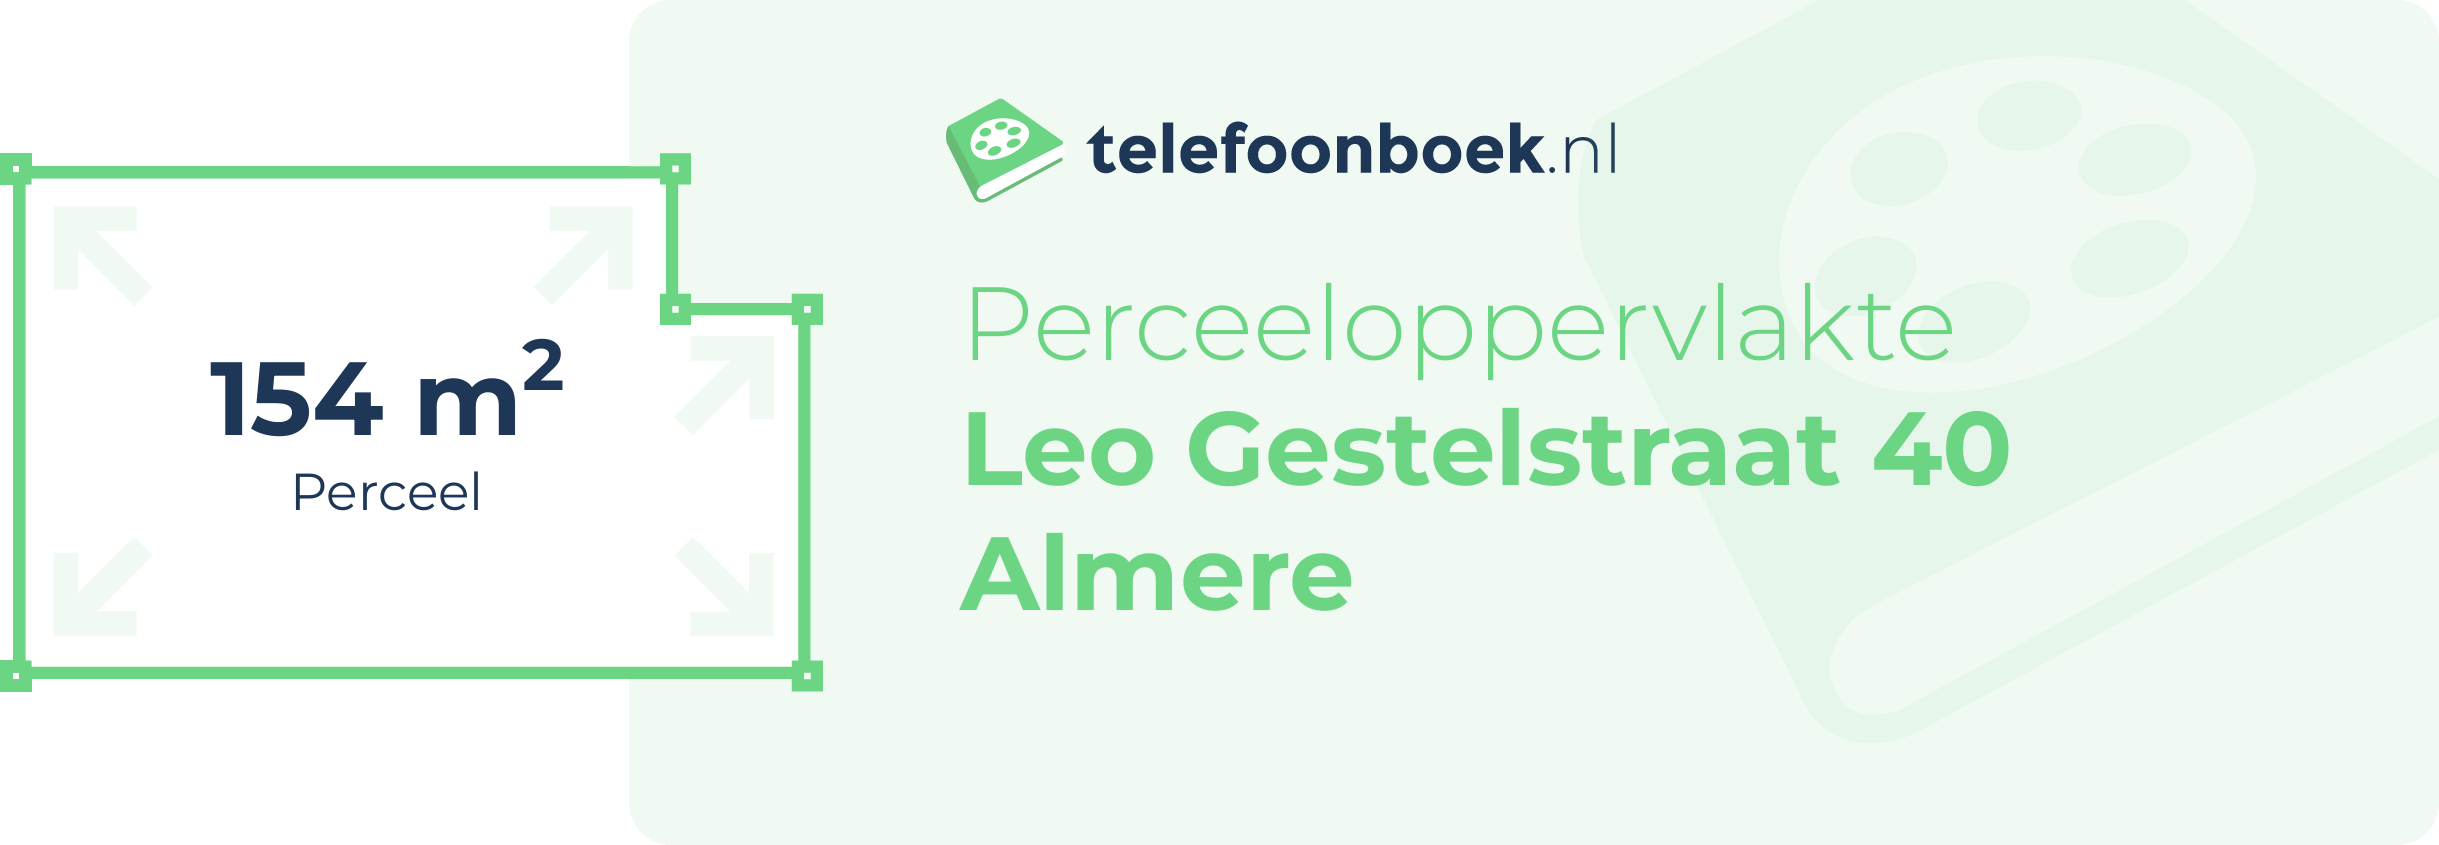 Perceeloppervlakte Leo Gestelstraat 40 Almere